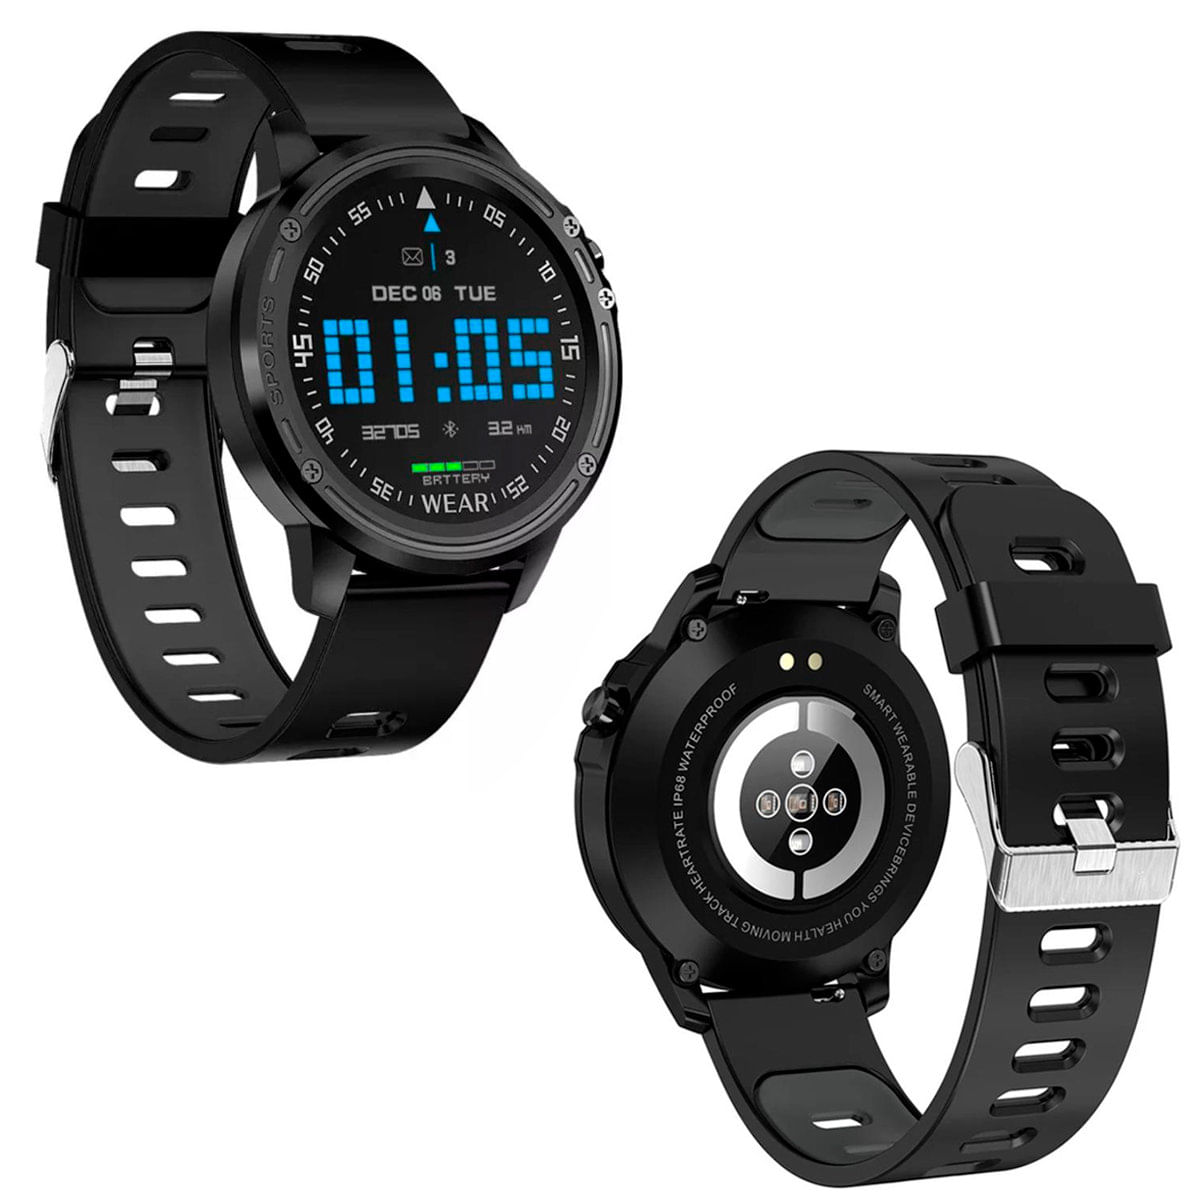 Смарт часы Waterproof 1.3. Rohs ip68 Waterproof Smart Wearable device. Smart Wear часы. Gs wear смарт